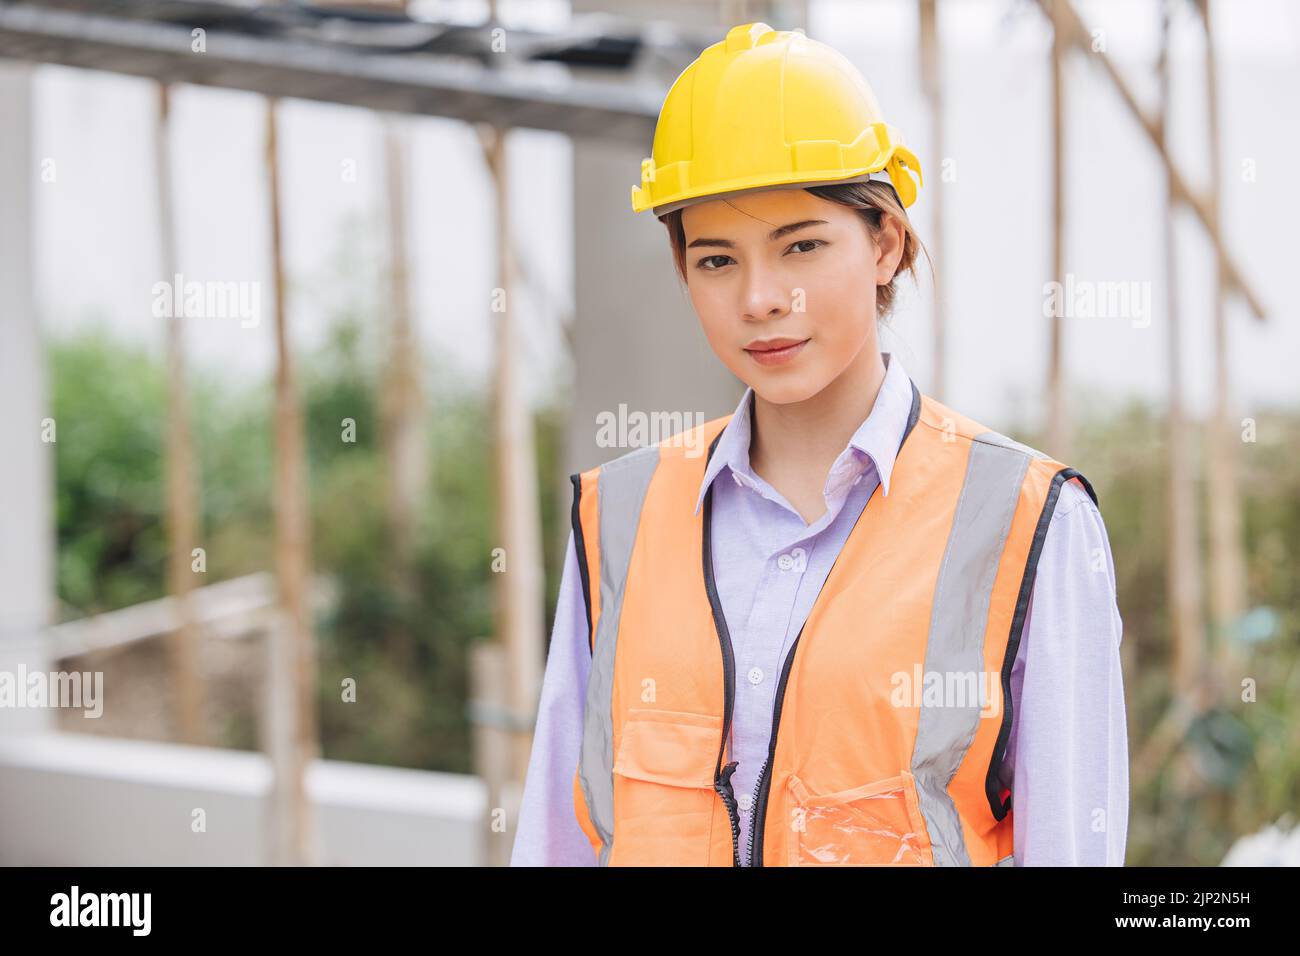 Portrait Women engineer worker foreman builder work in construction site with safety helmet. Stock Photo